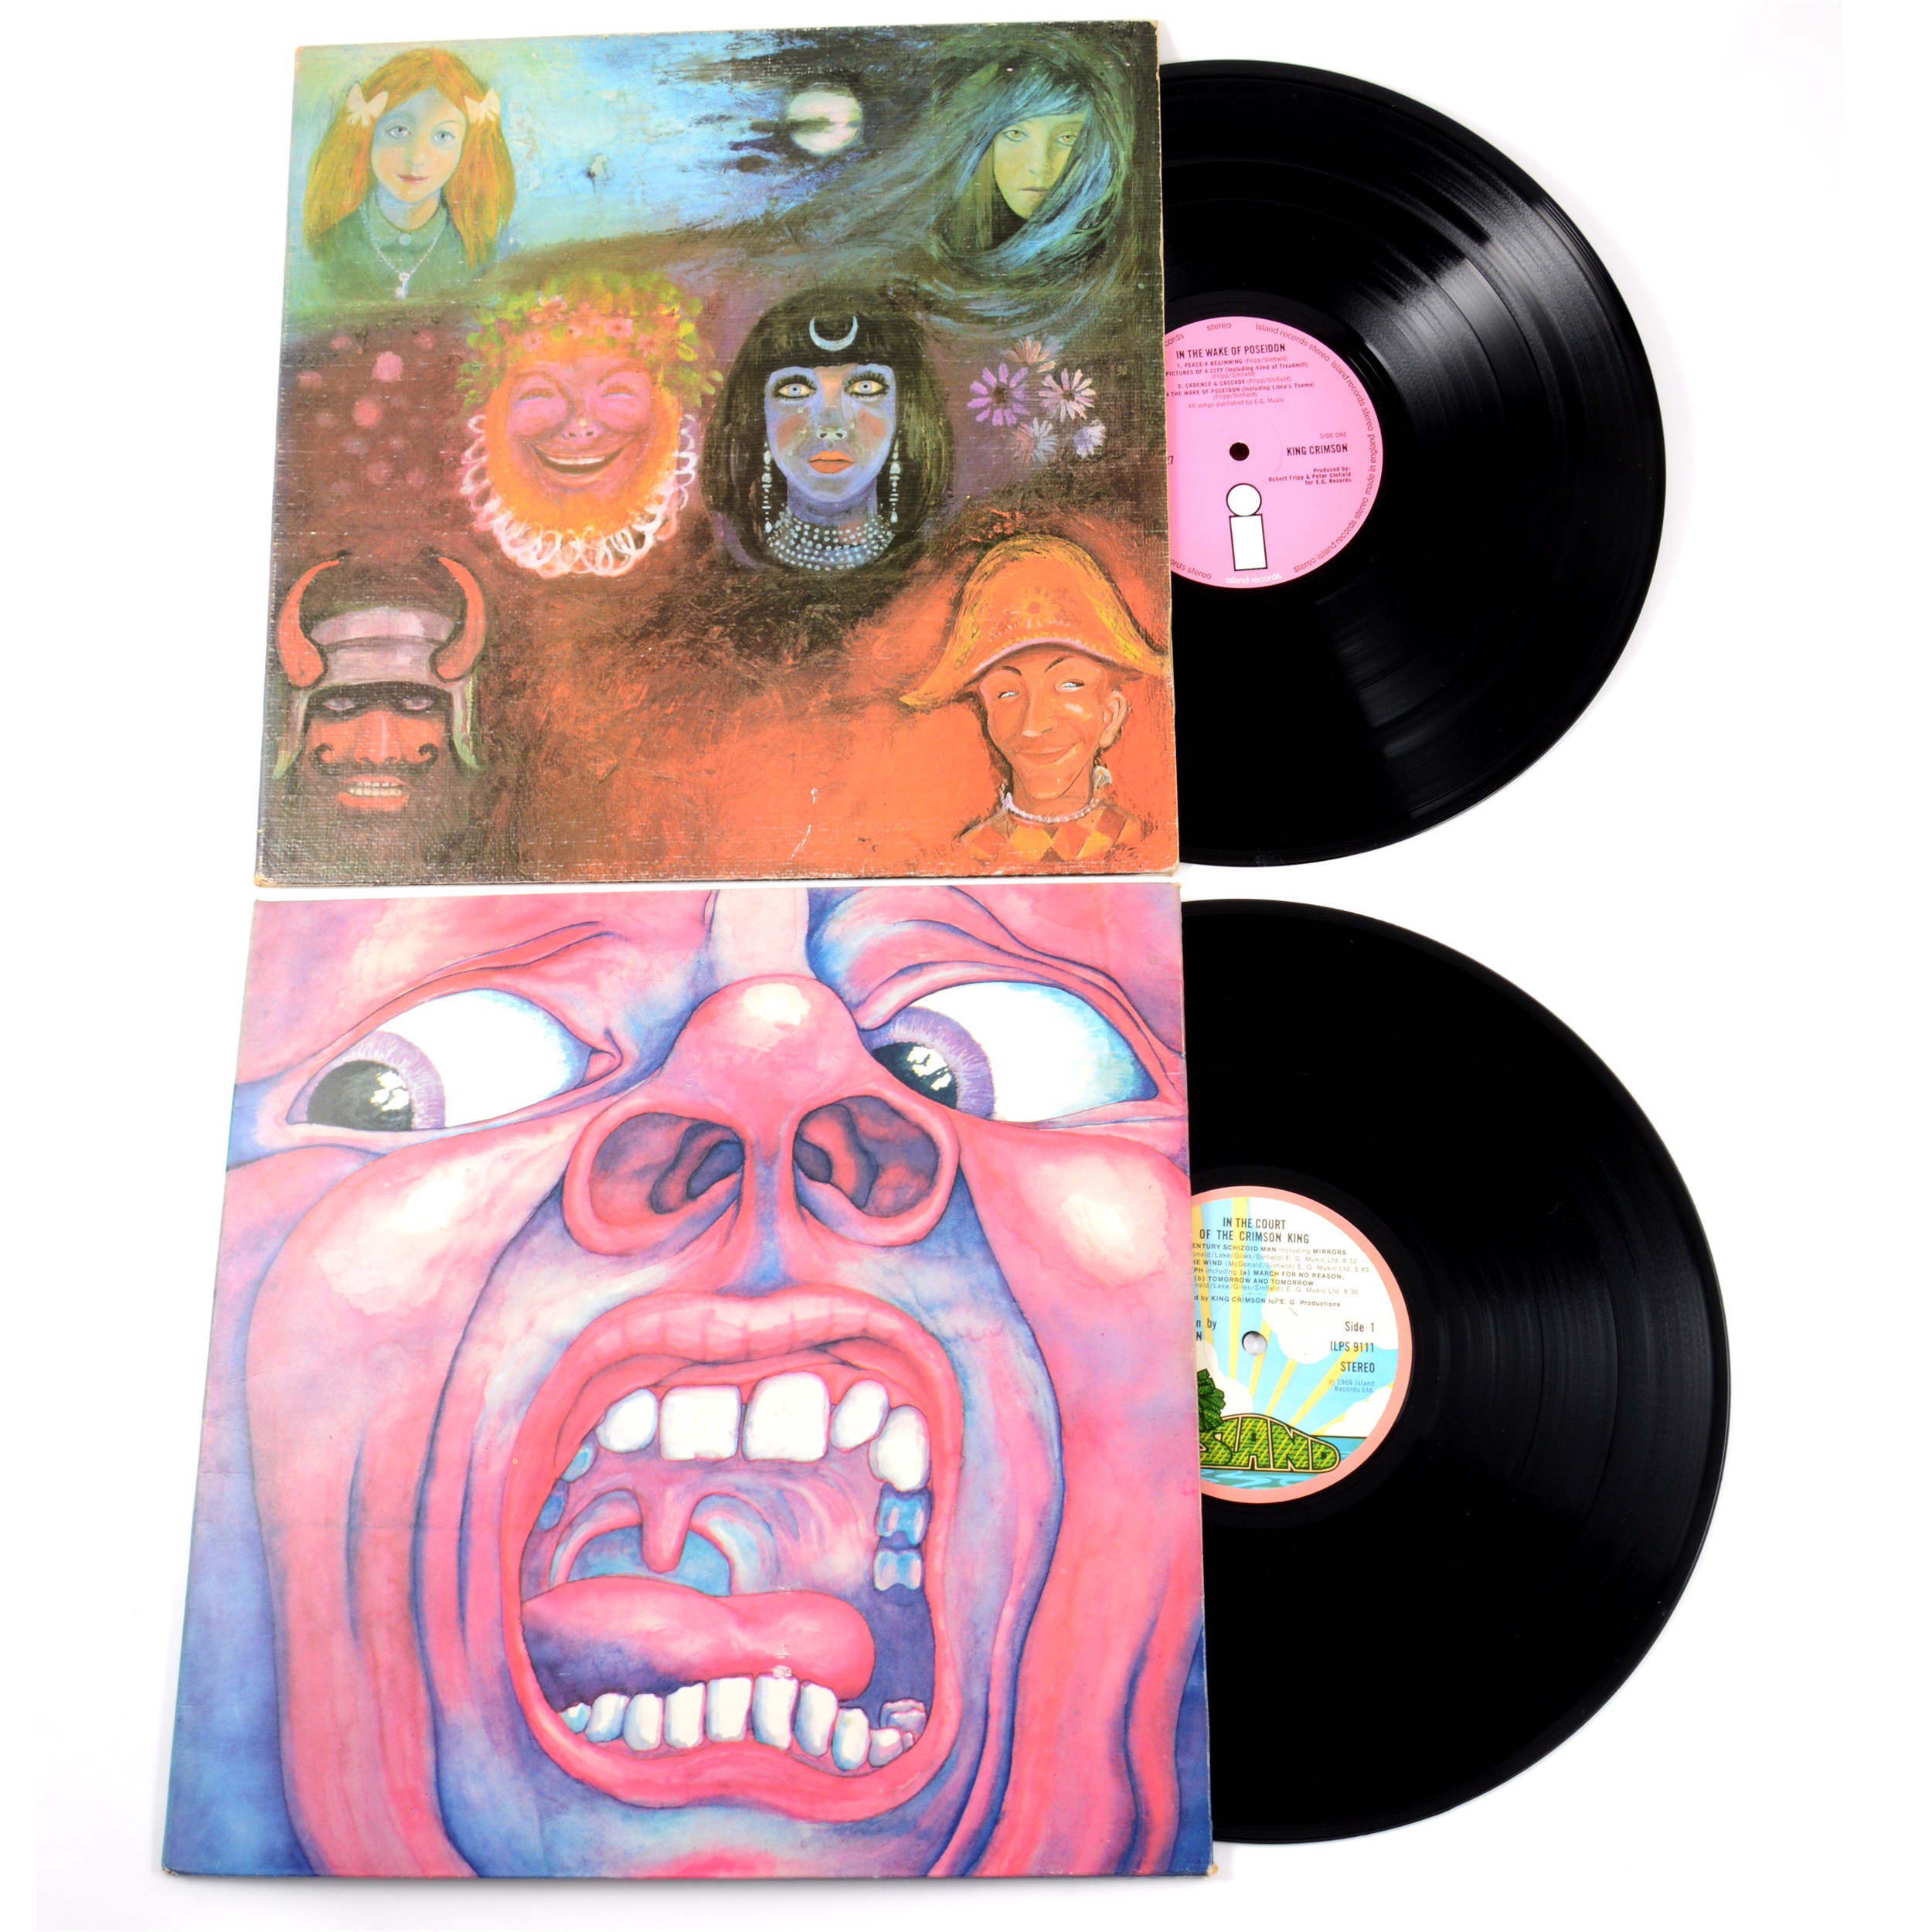 Lot 447 - King Crimson - Two LP vinyl albums, In the